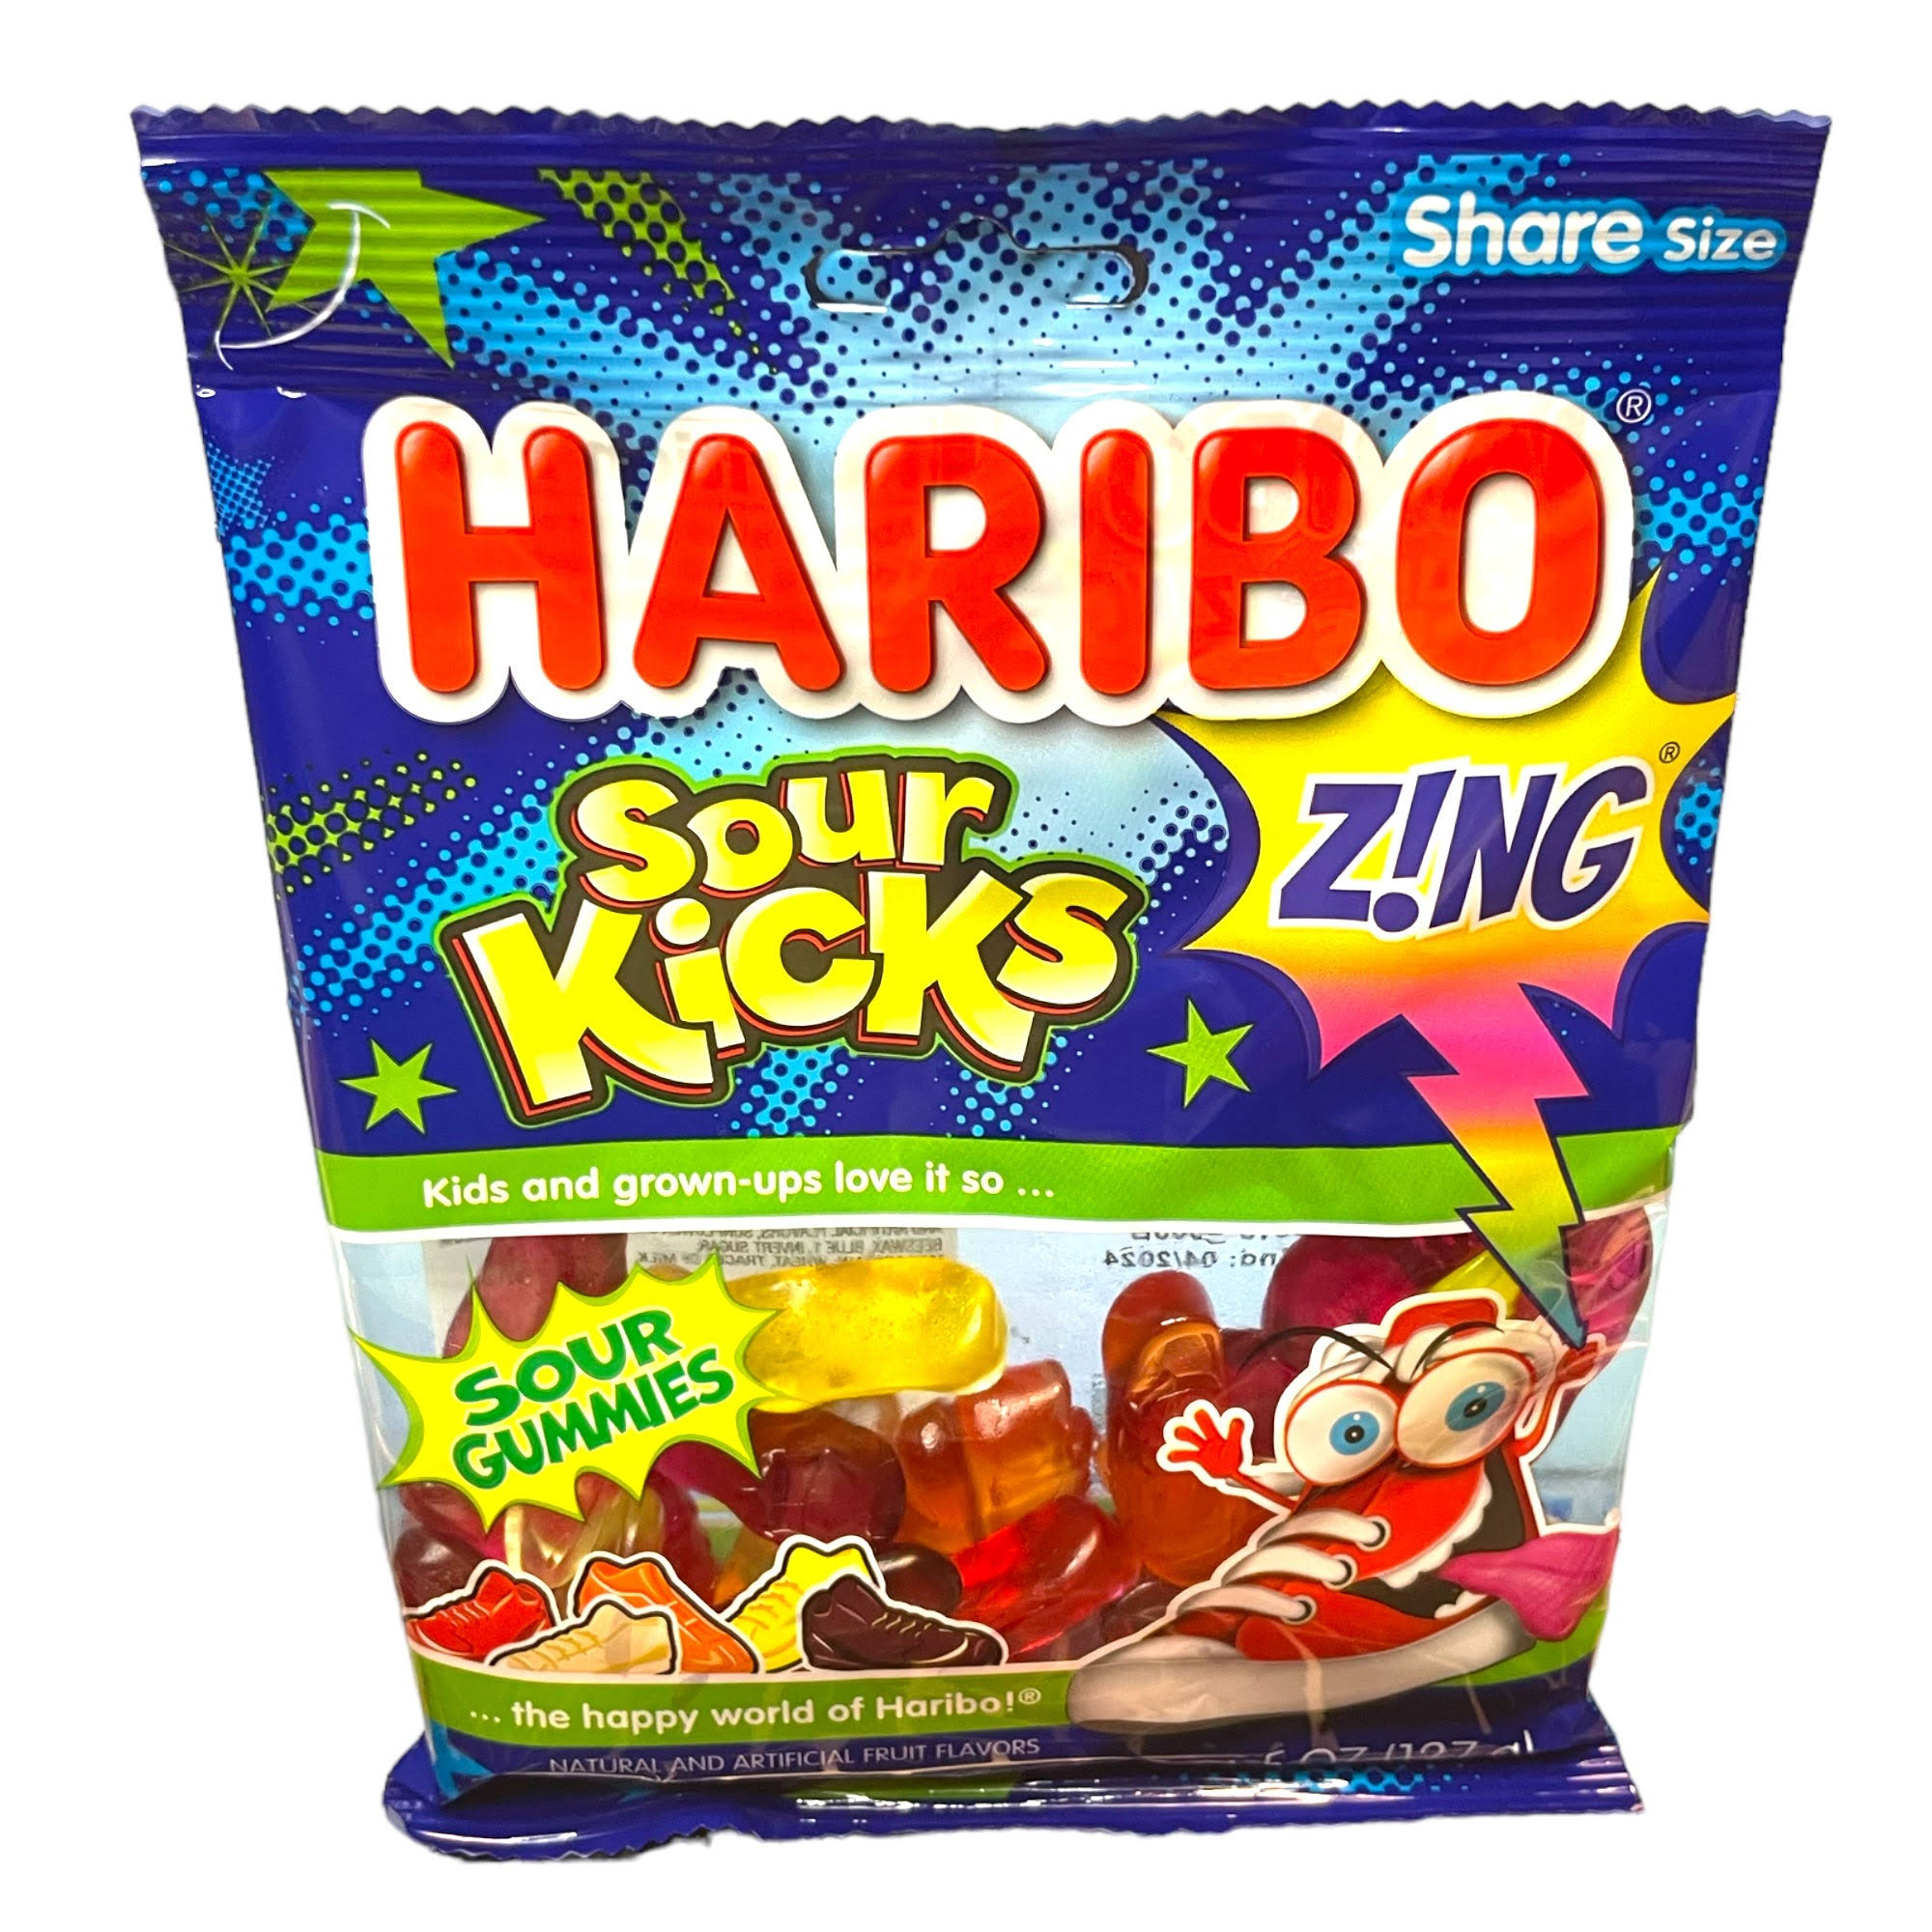 Haribo Sour Kicks Zing - 142g